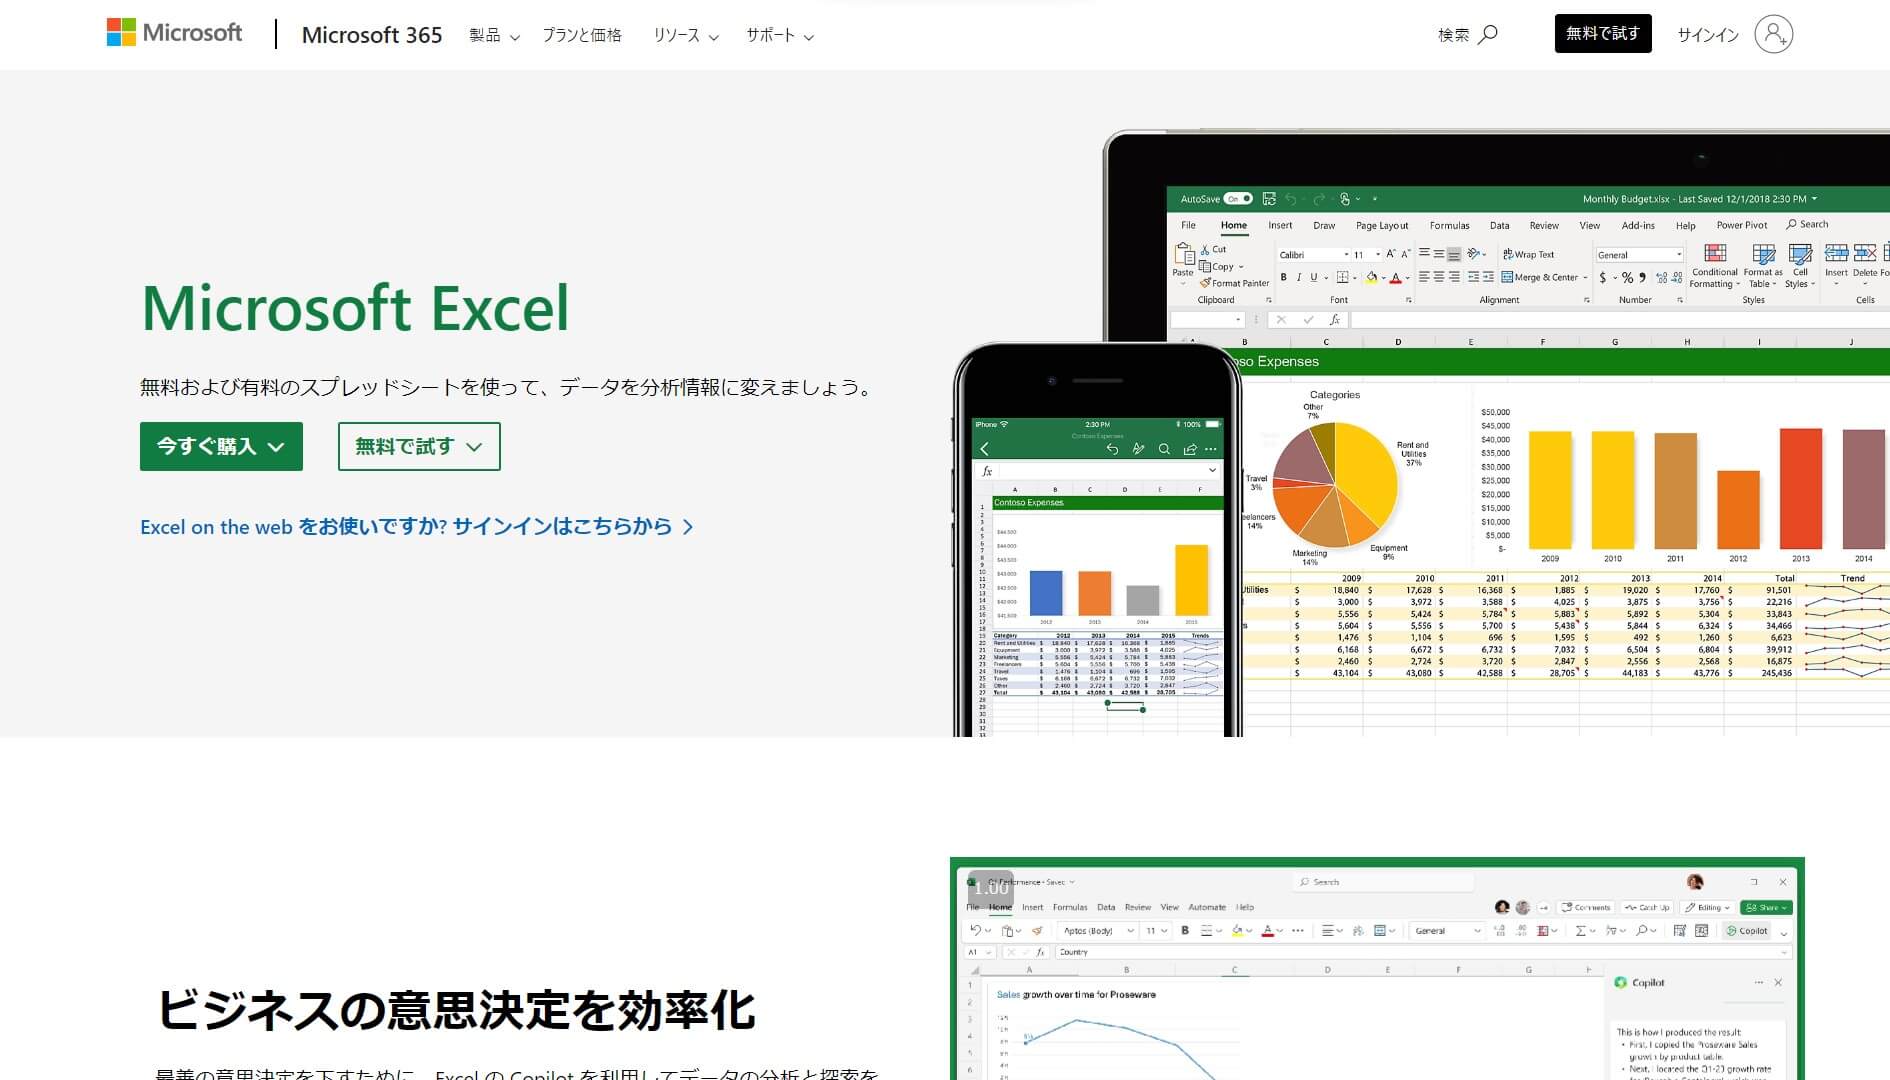 ExcelはMicrosoftの提供